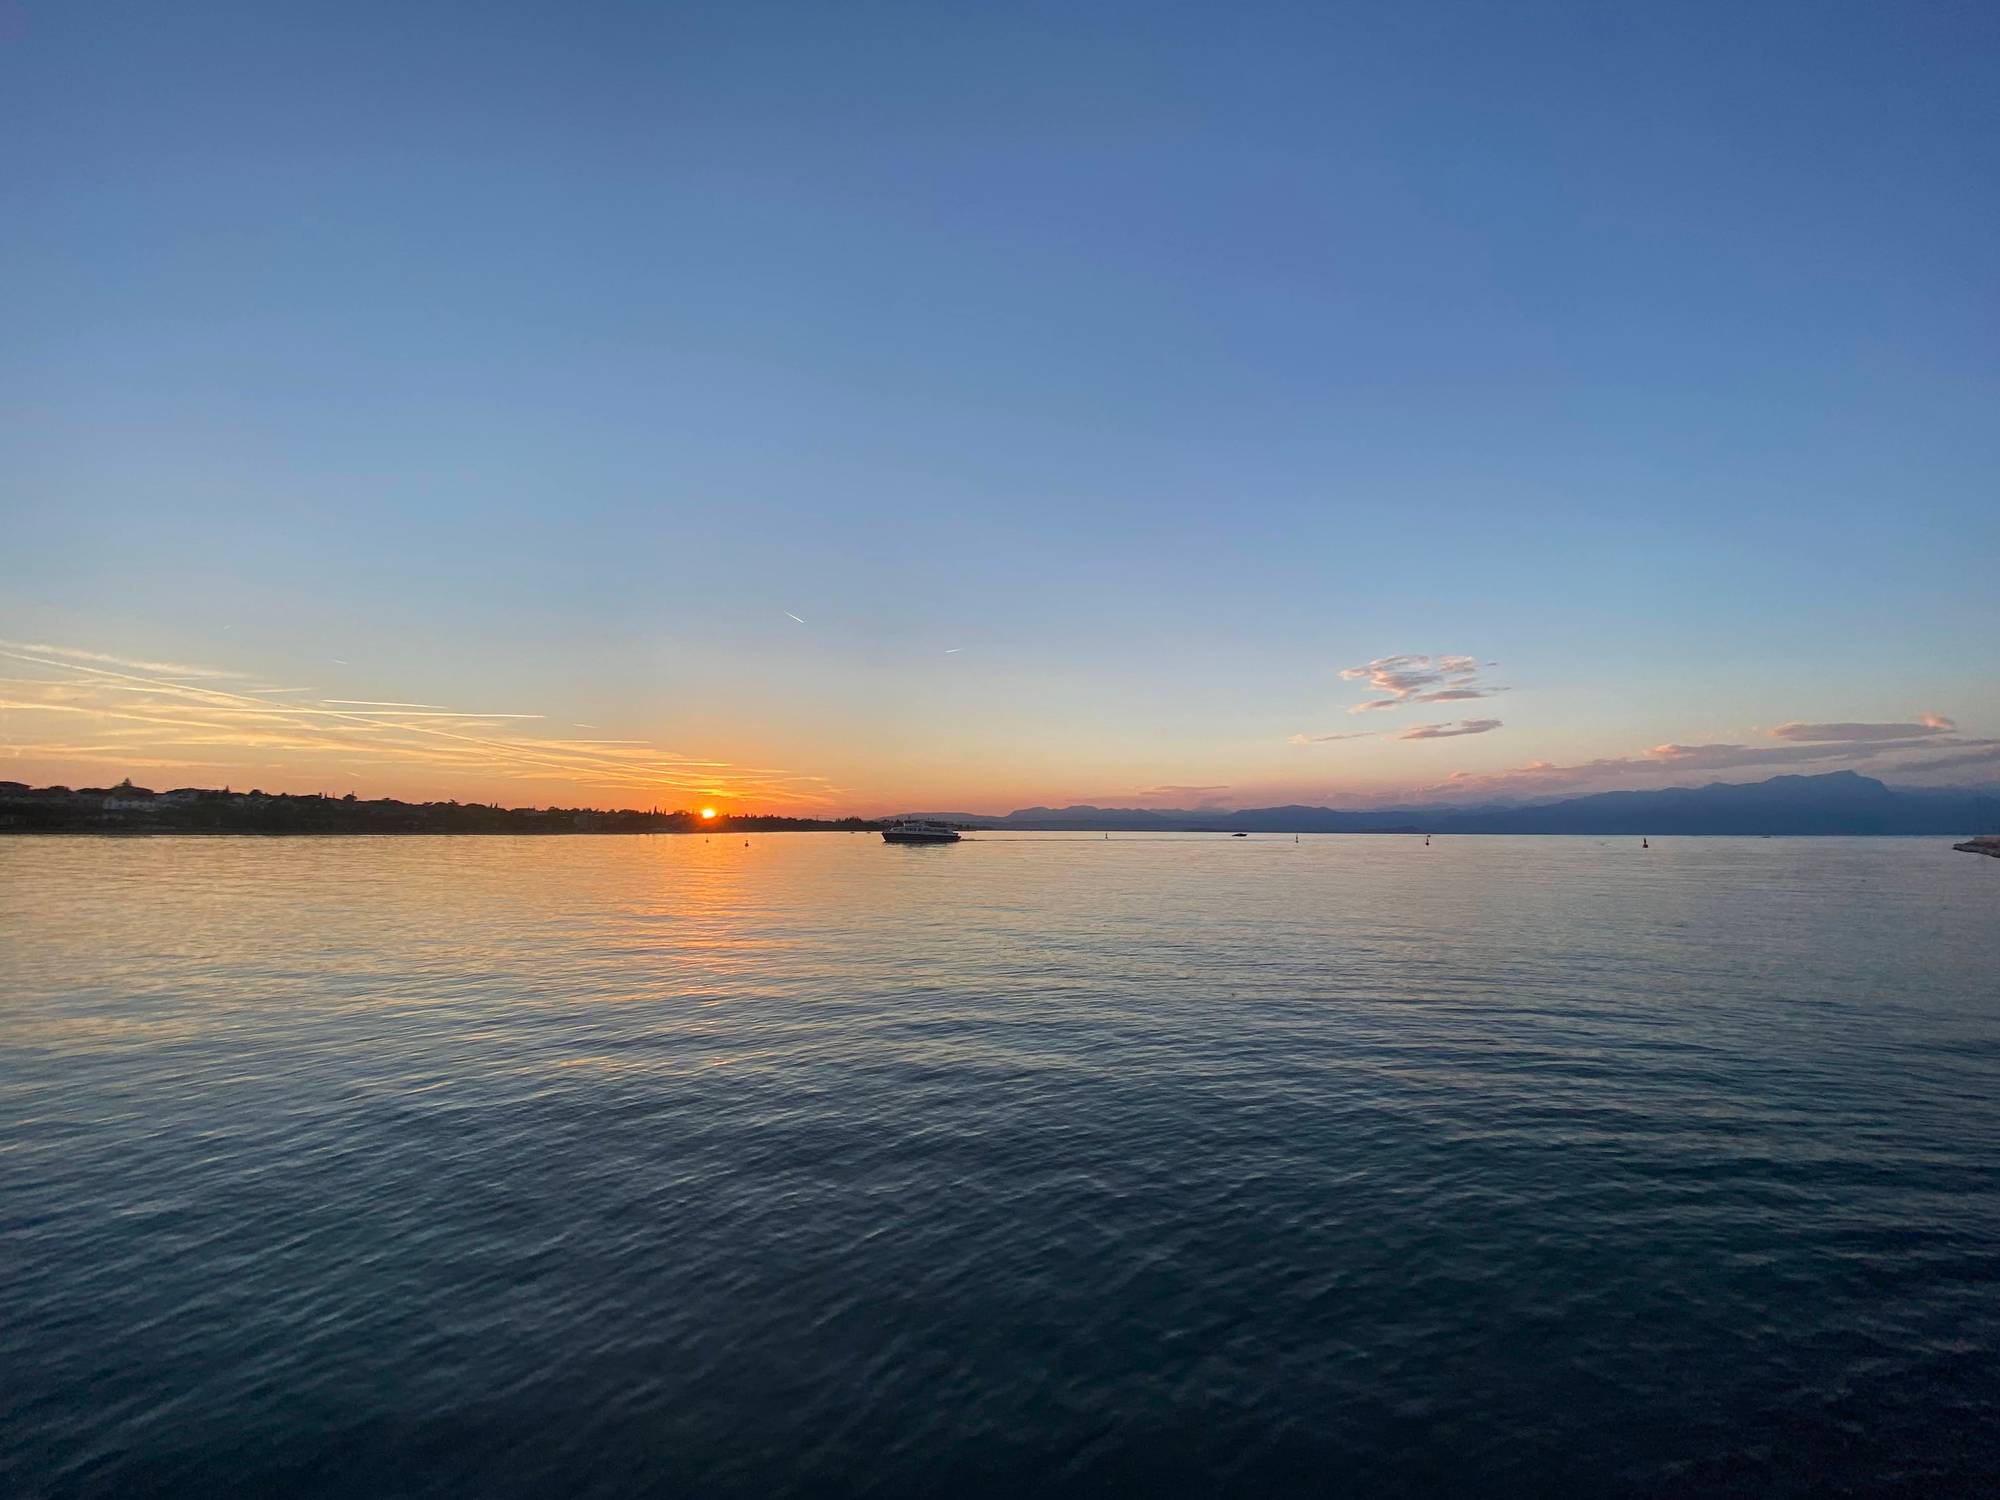 Sunset over lake Garda